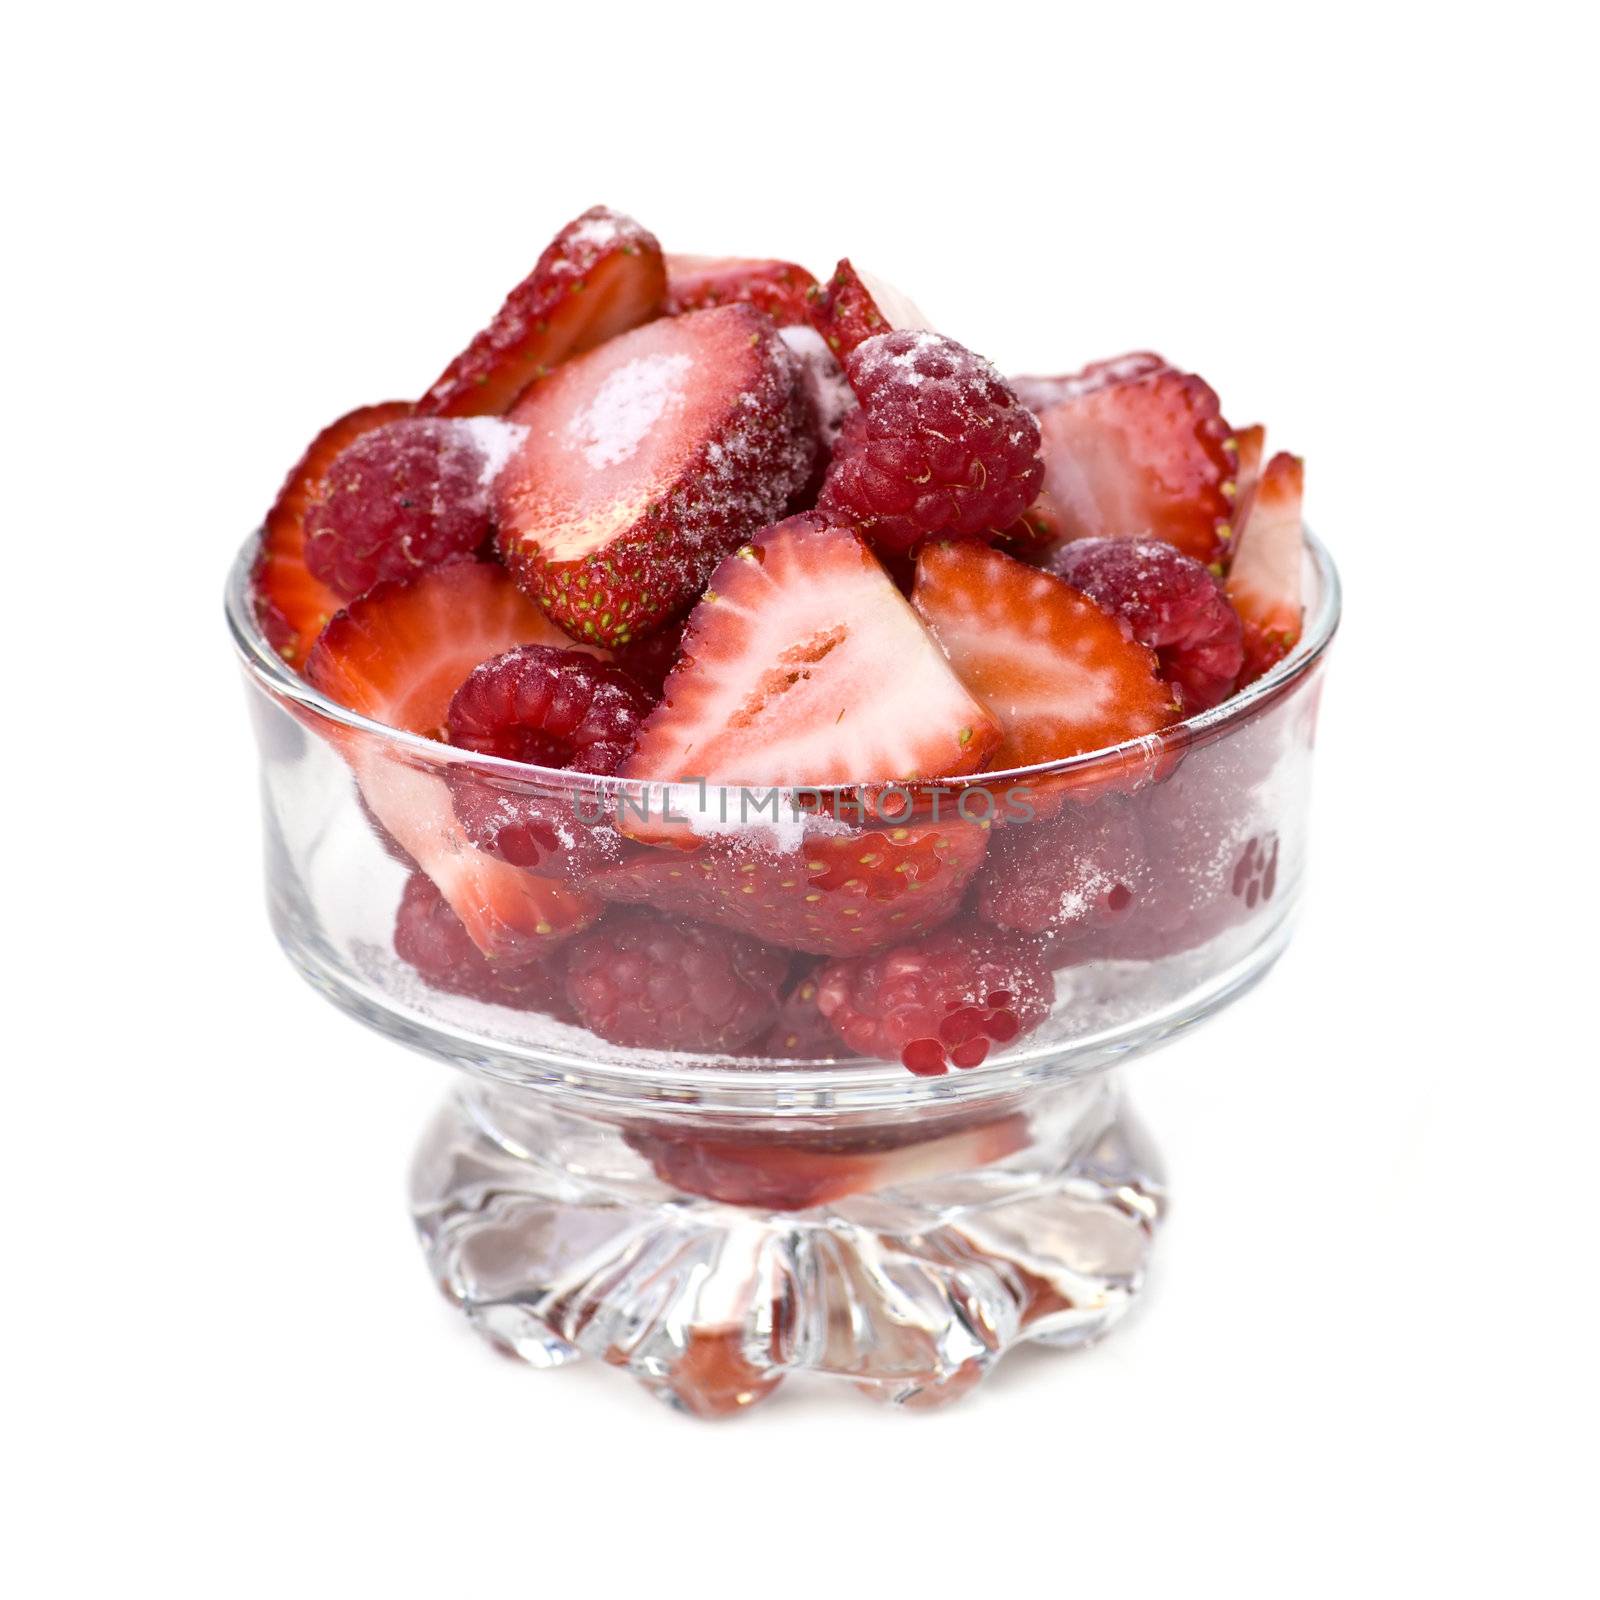 Fresh raspberries and strawberries in dish by elenathewise